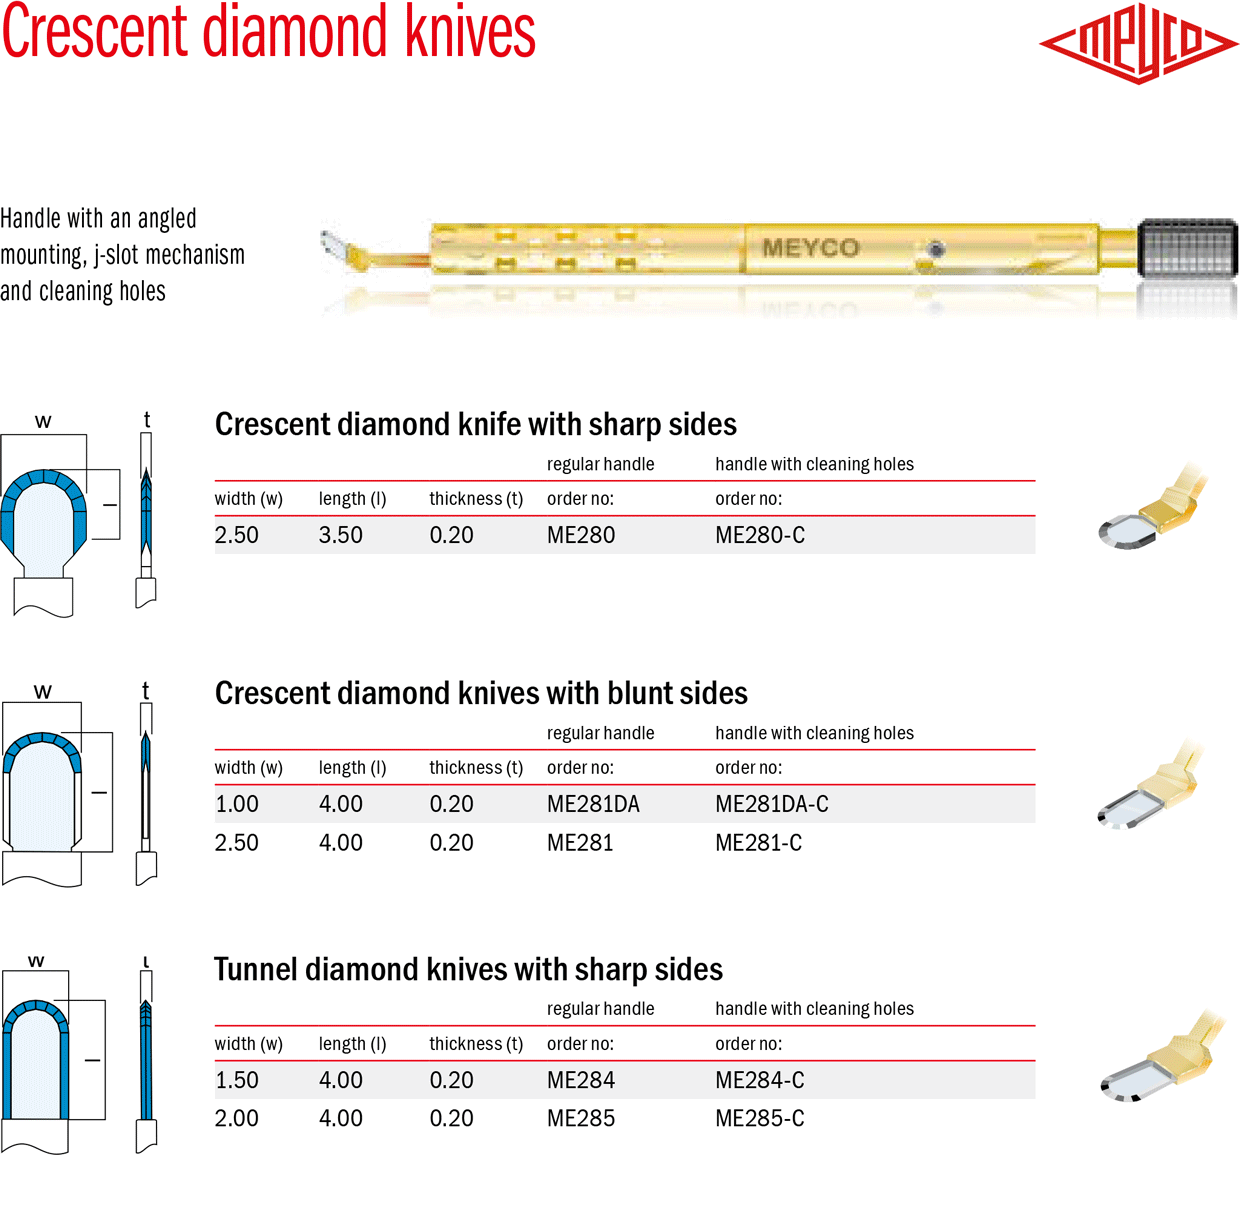 Crescent diamond knives